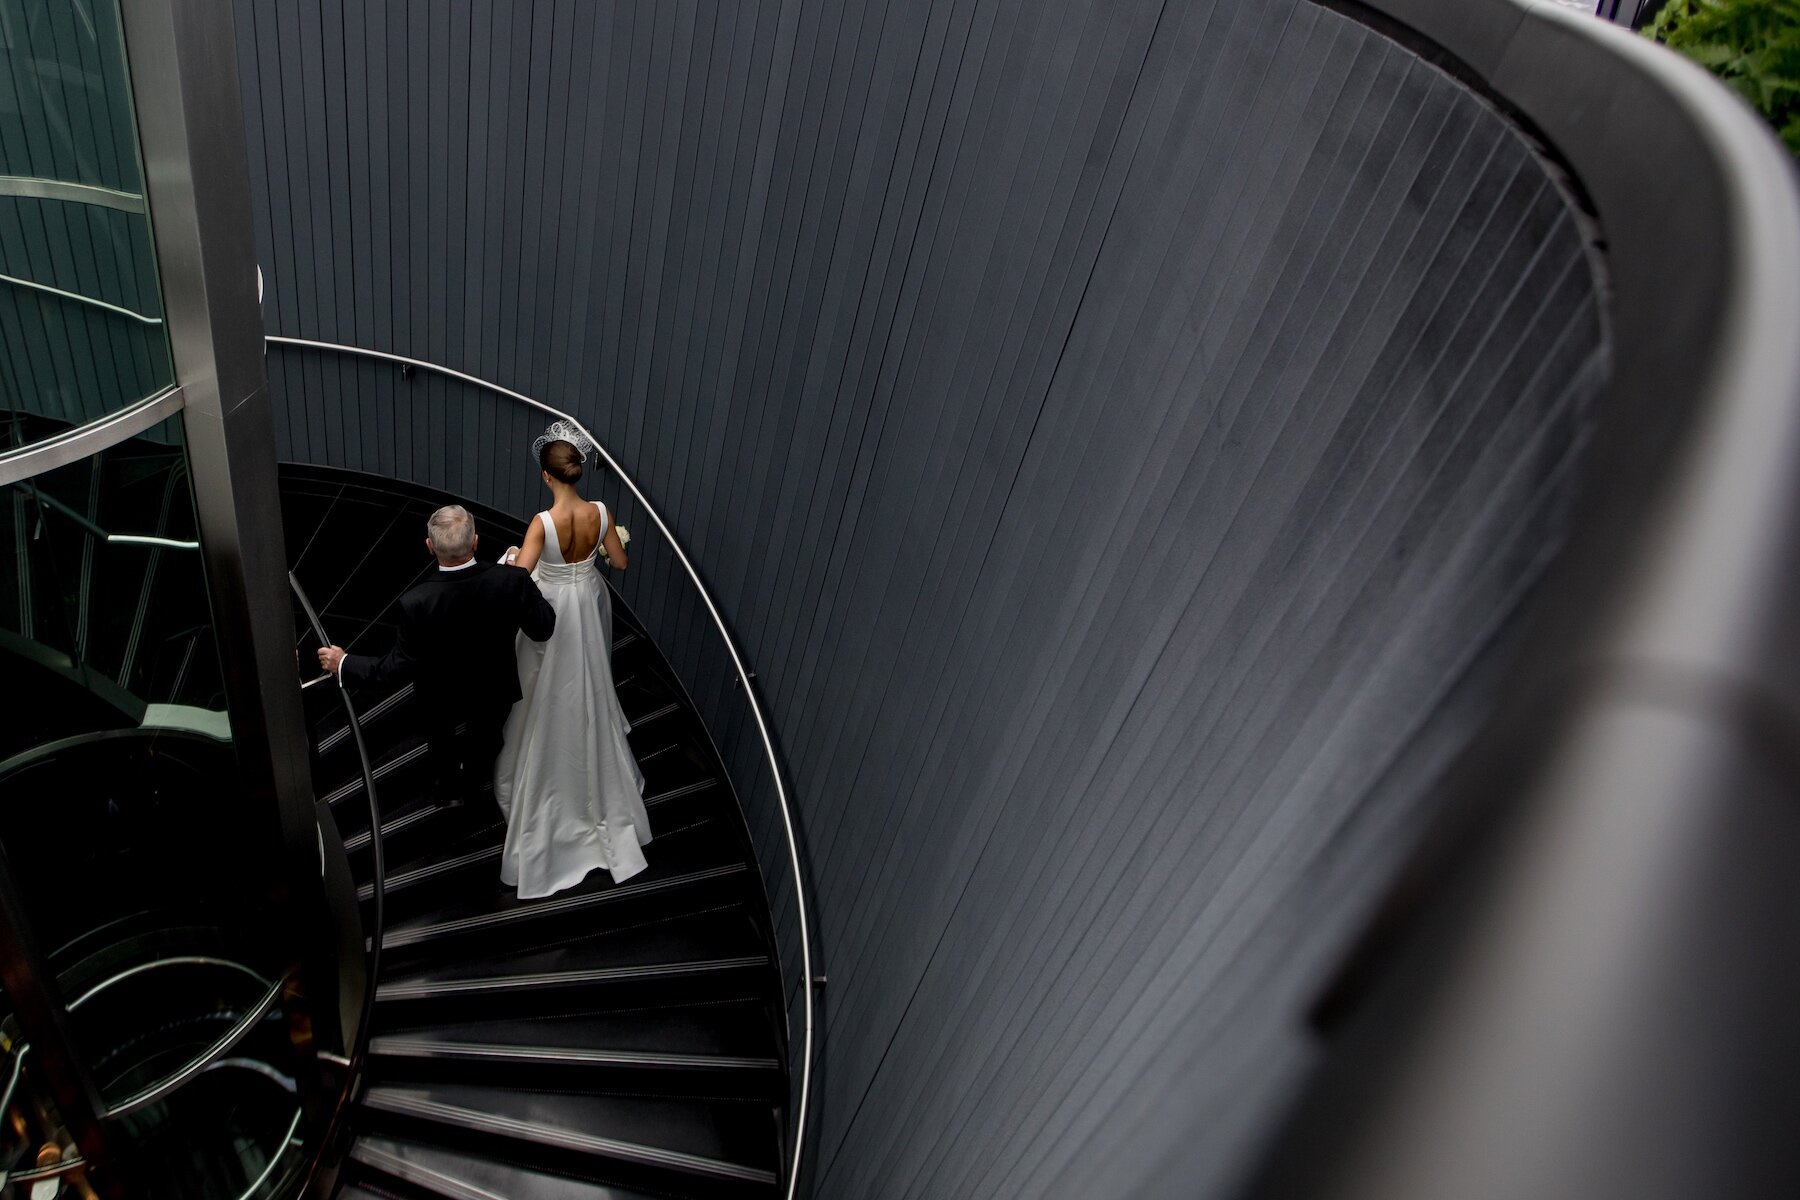 Richard Murgatroyd Photography - Most Curious Wedding Fair London - Truman Brewery - London Wedding Photography - 02 1800x1200.jpg